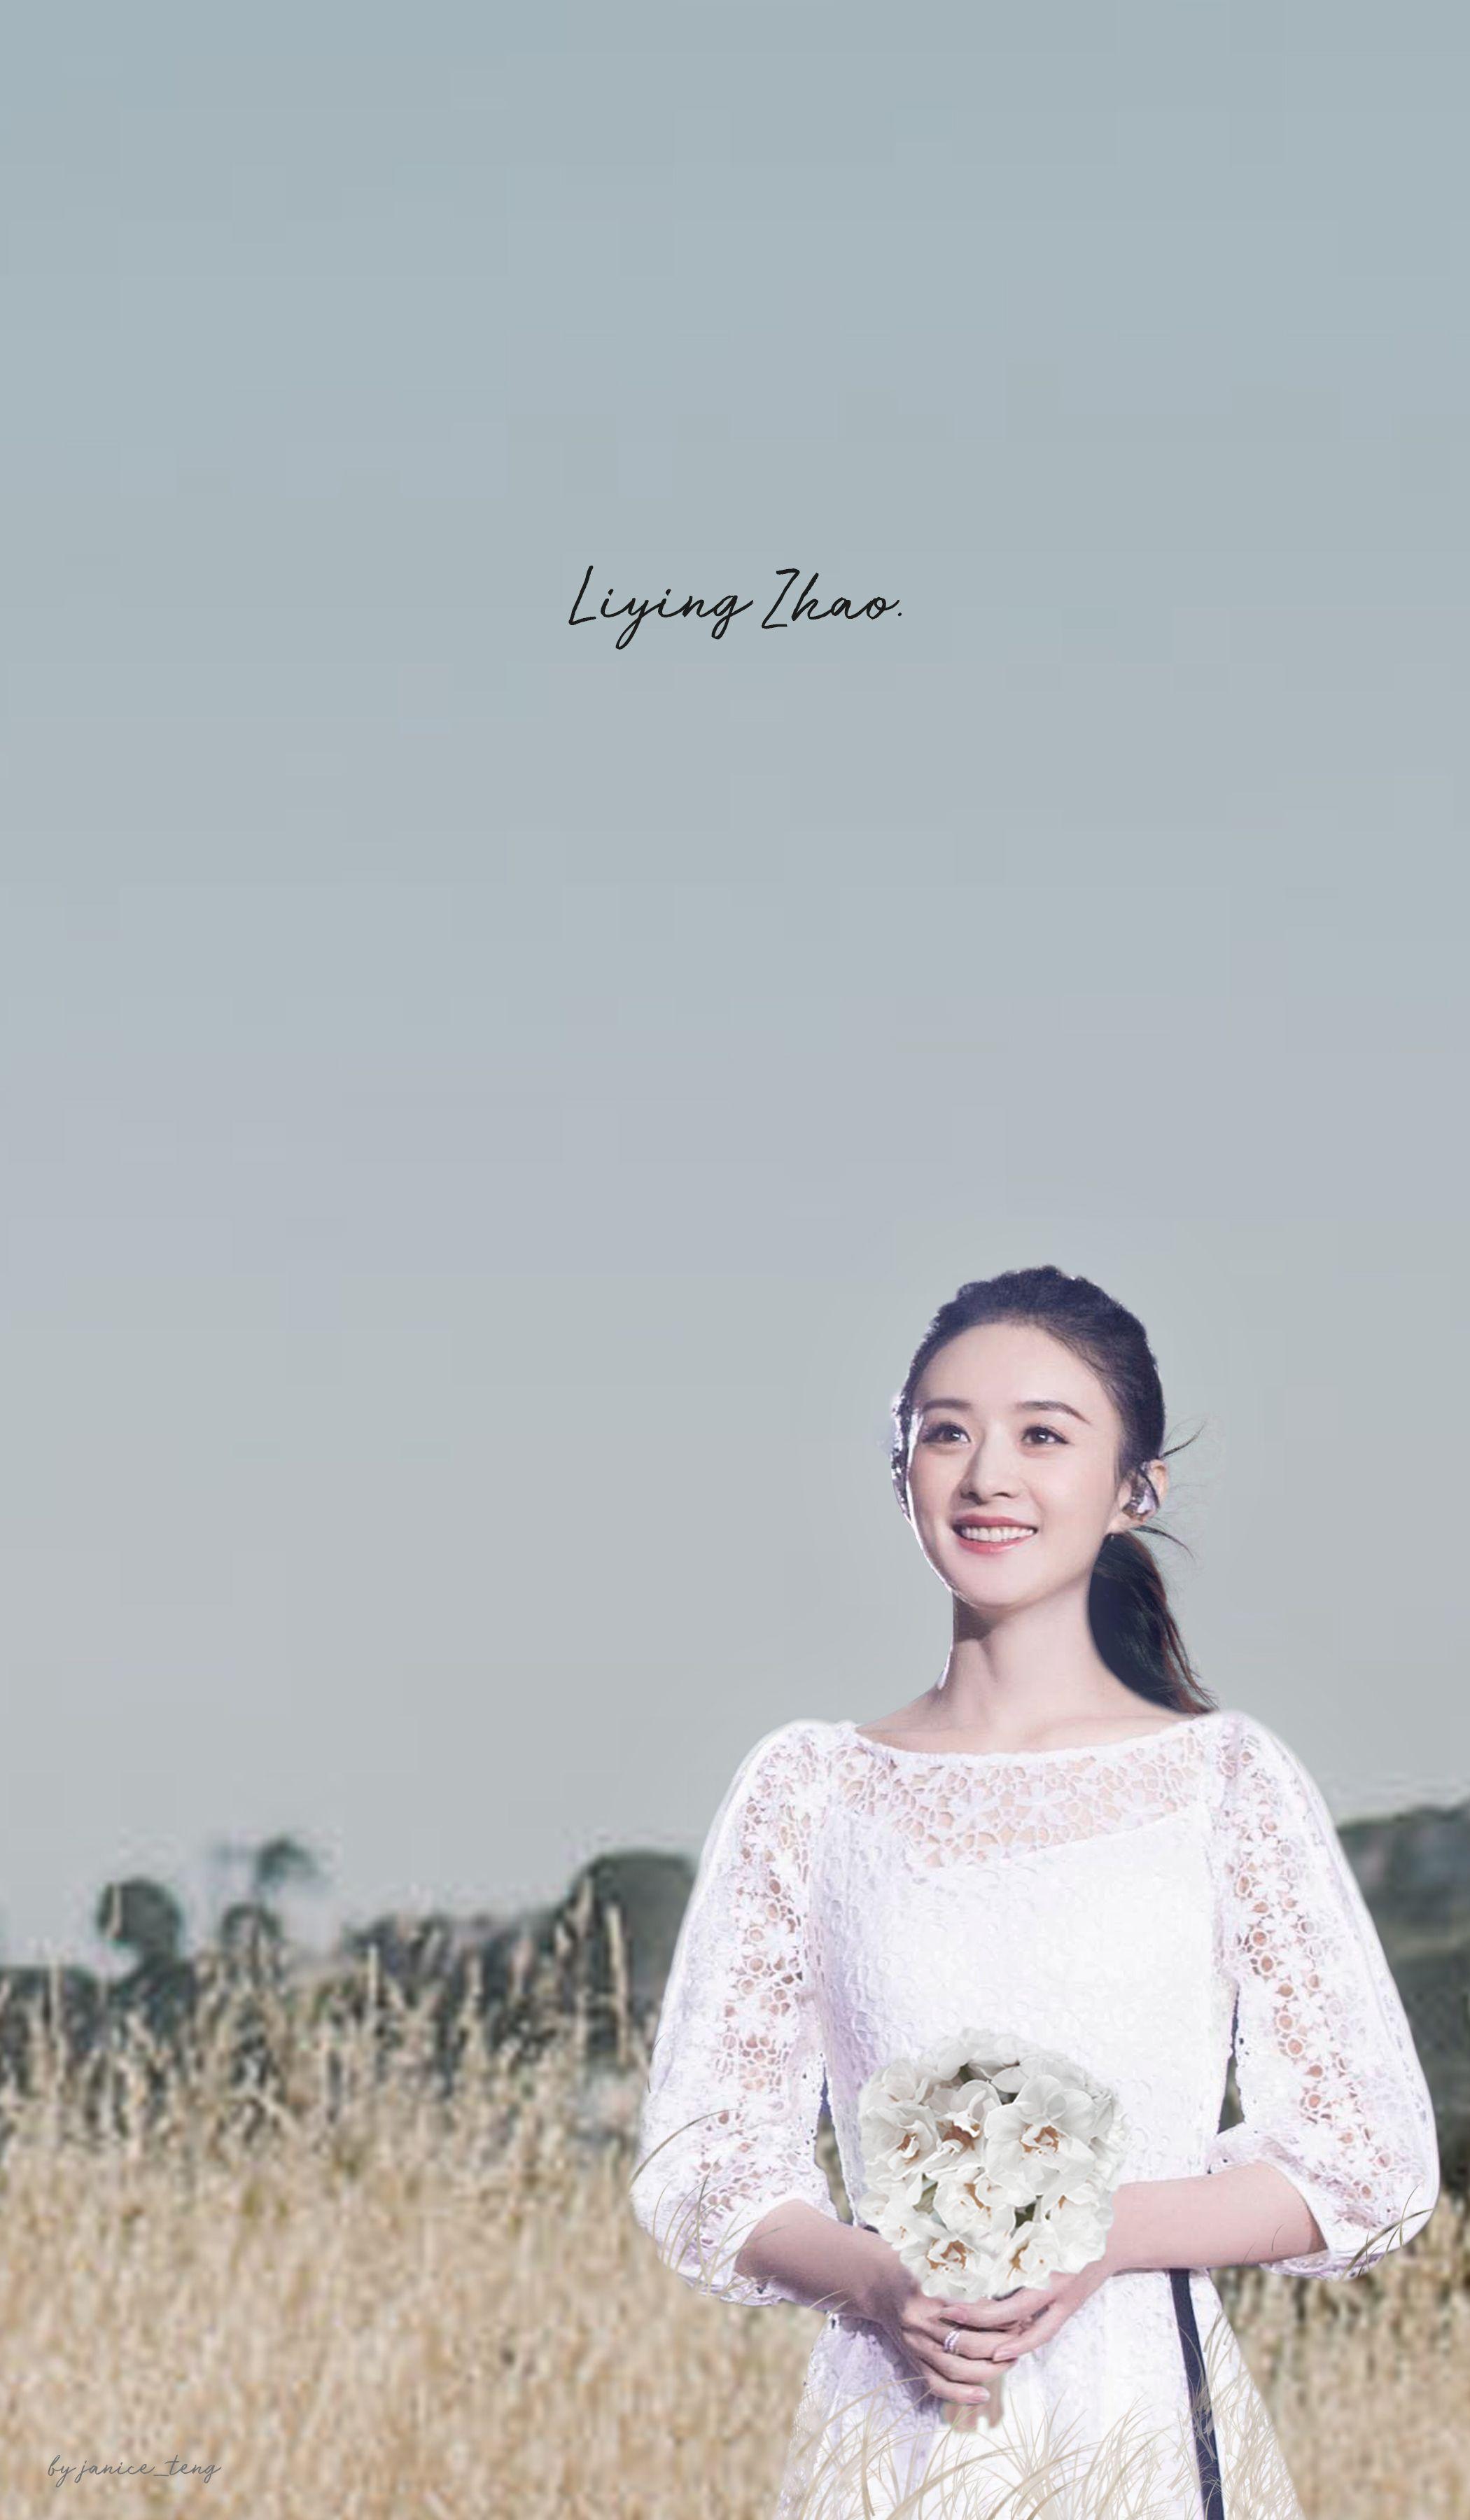 Liying Zhao Lockscreen. Idol LockScreen Wallpaper. Lace tops, Lace